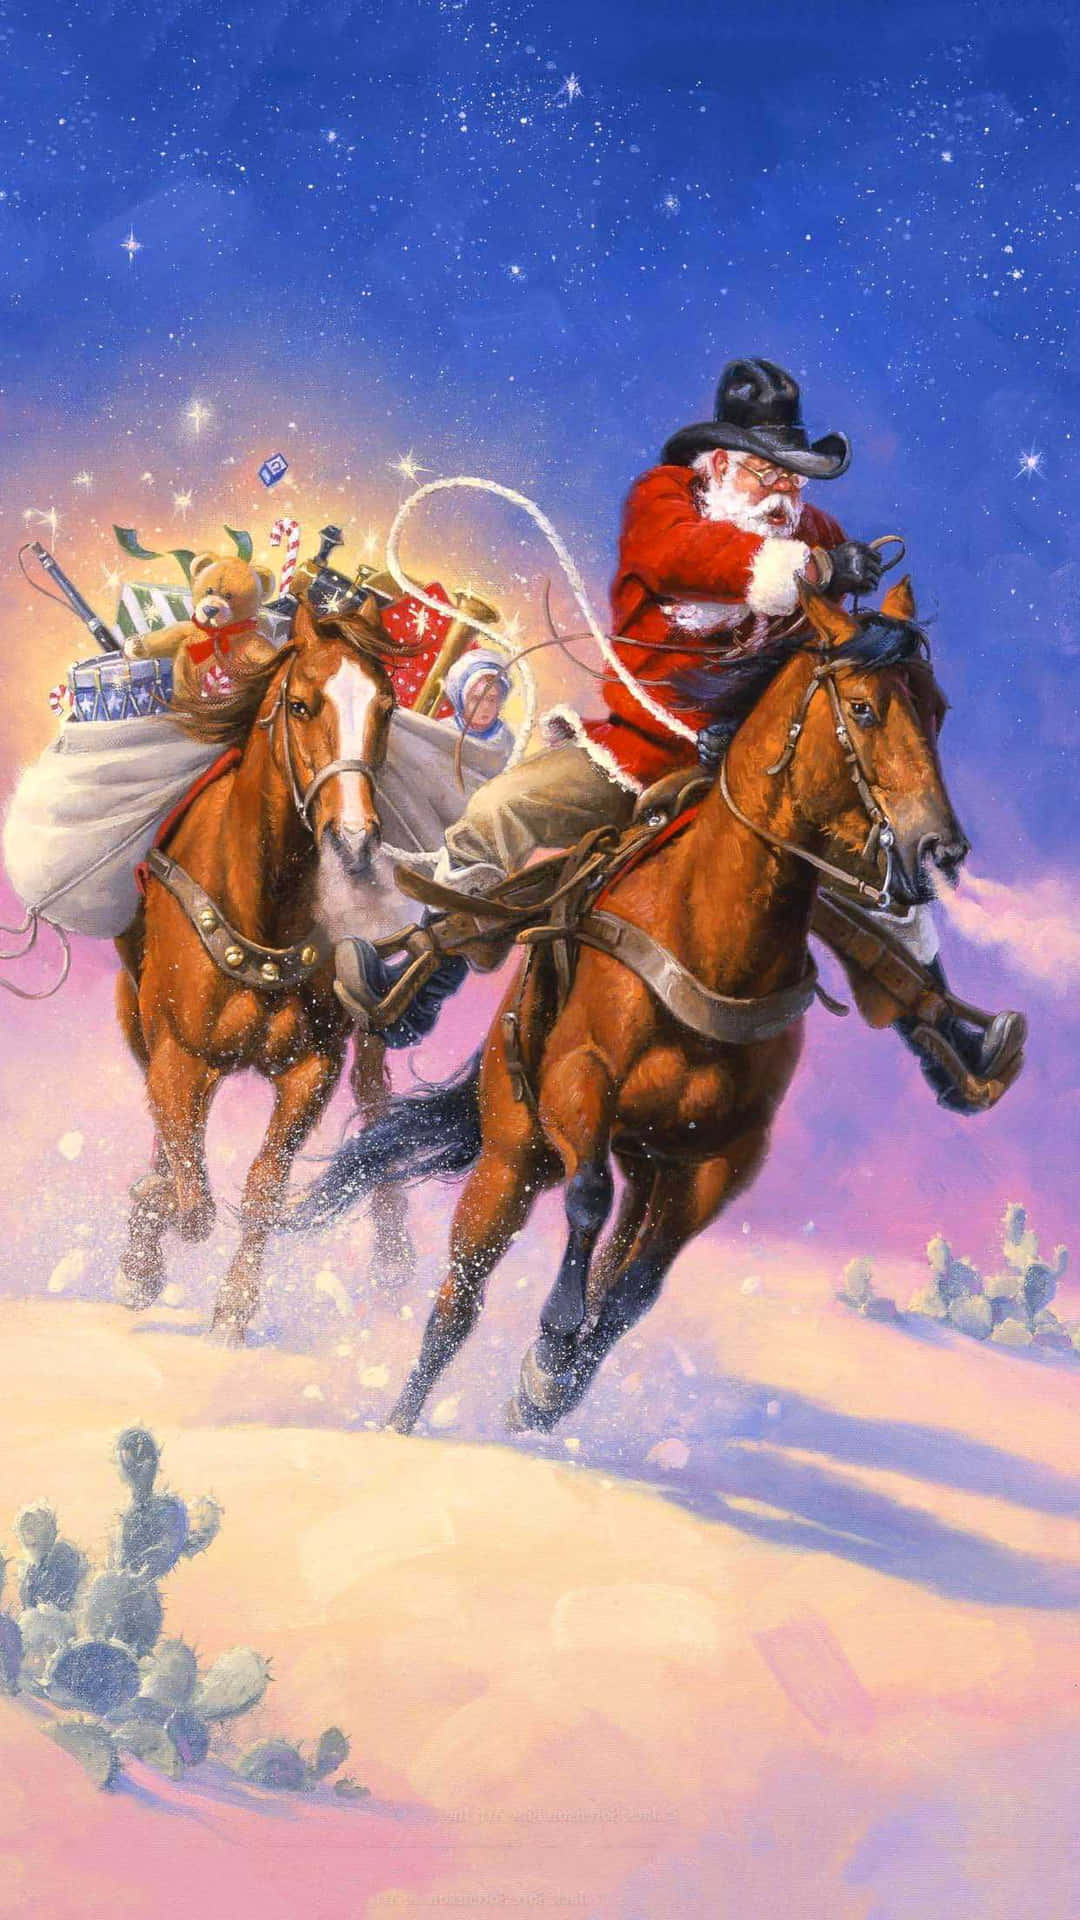 "Spread The Joy Of Cowboy Christmas!" Wallpaper